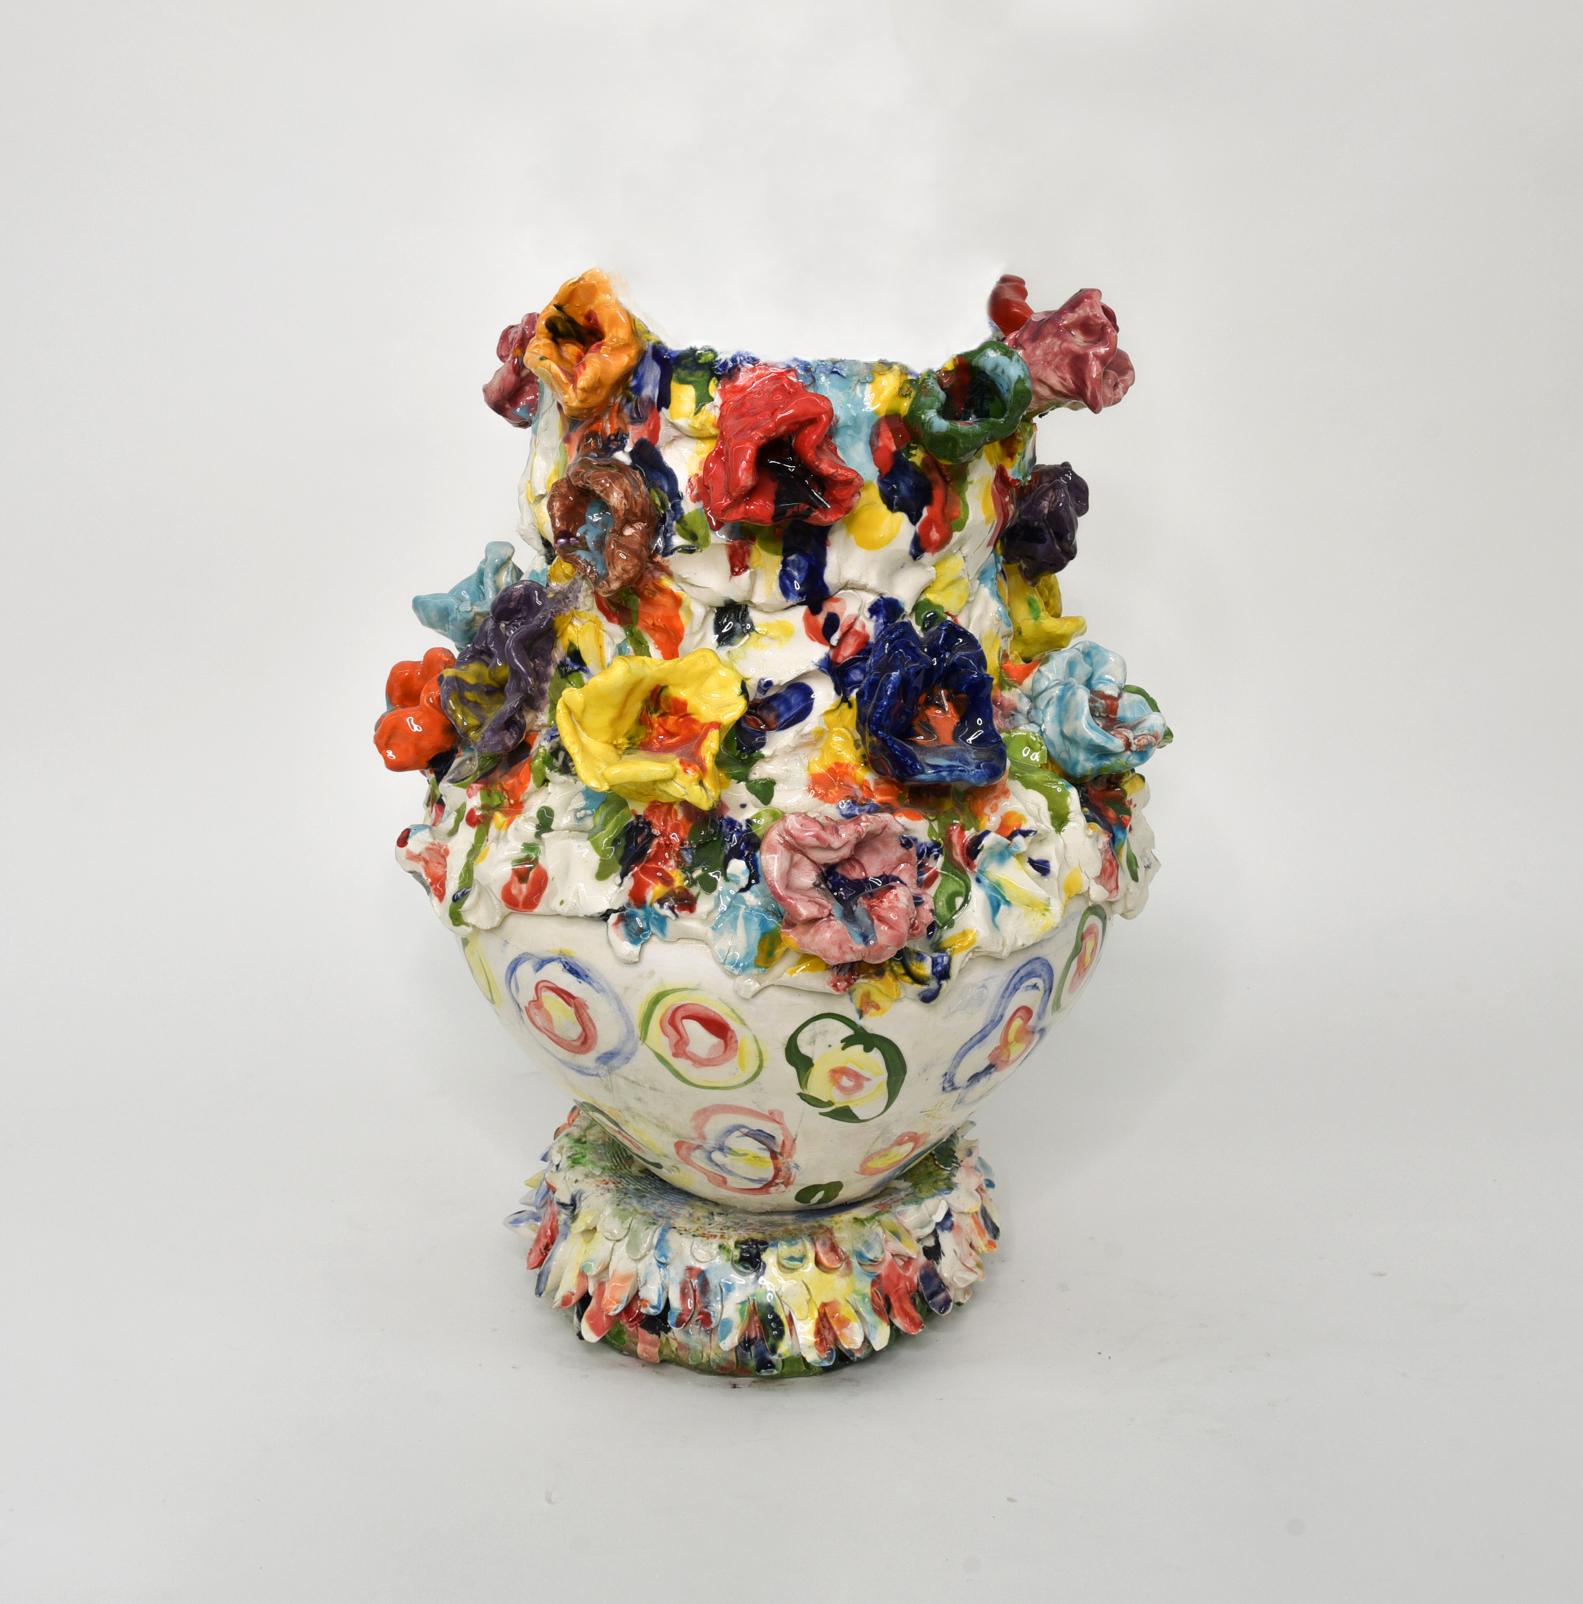 Charo Oquet Still-Life Sculpture - Colored flowers. Glazed ceramic sculpture